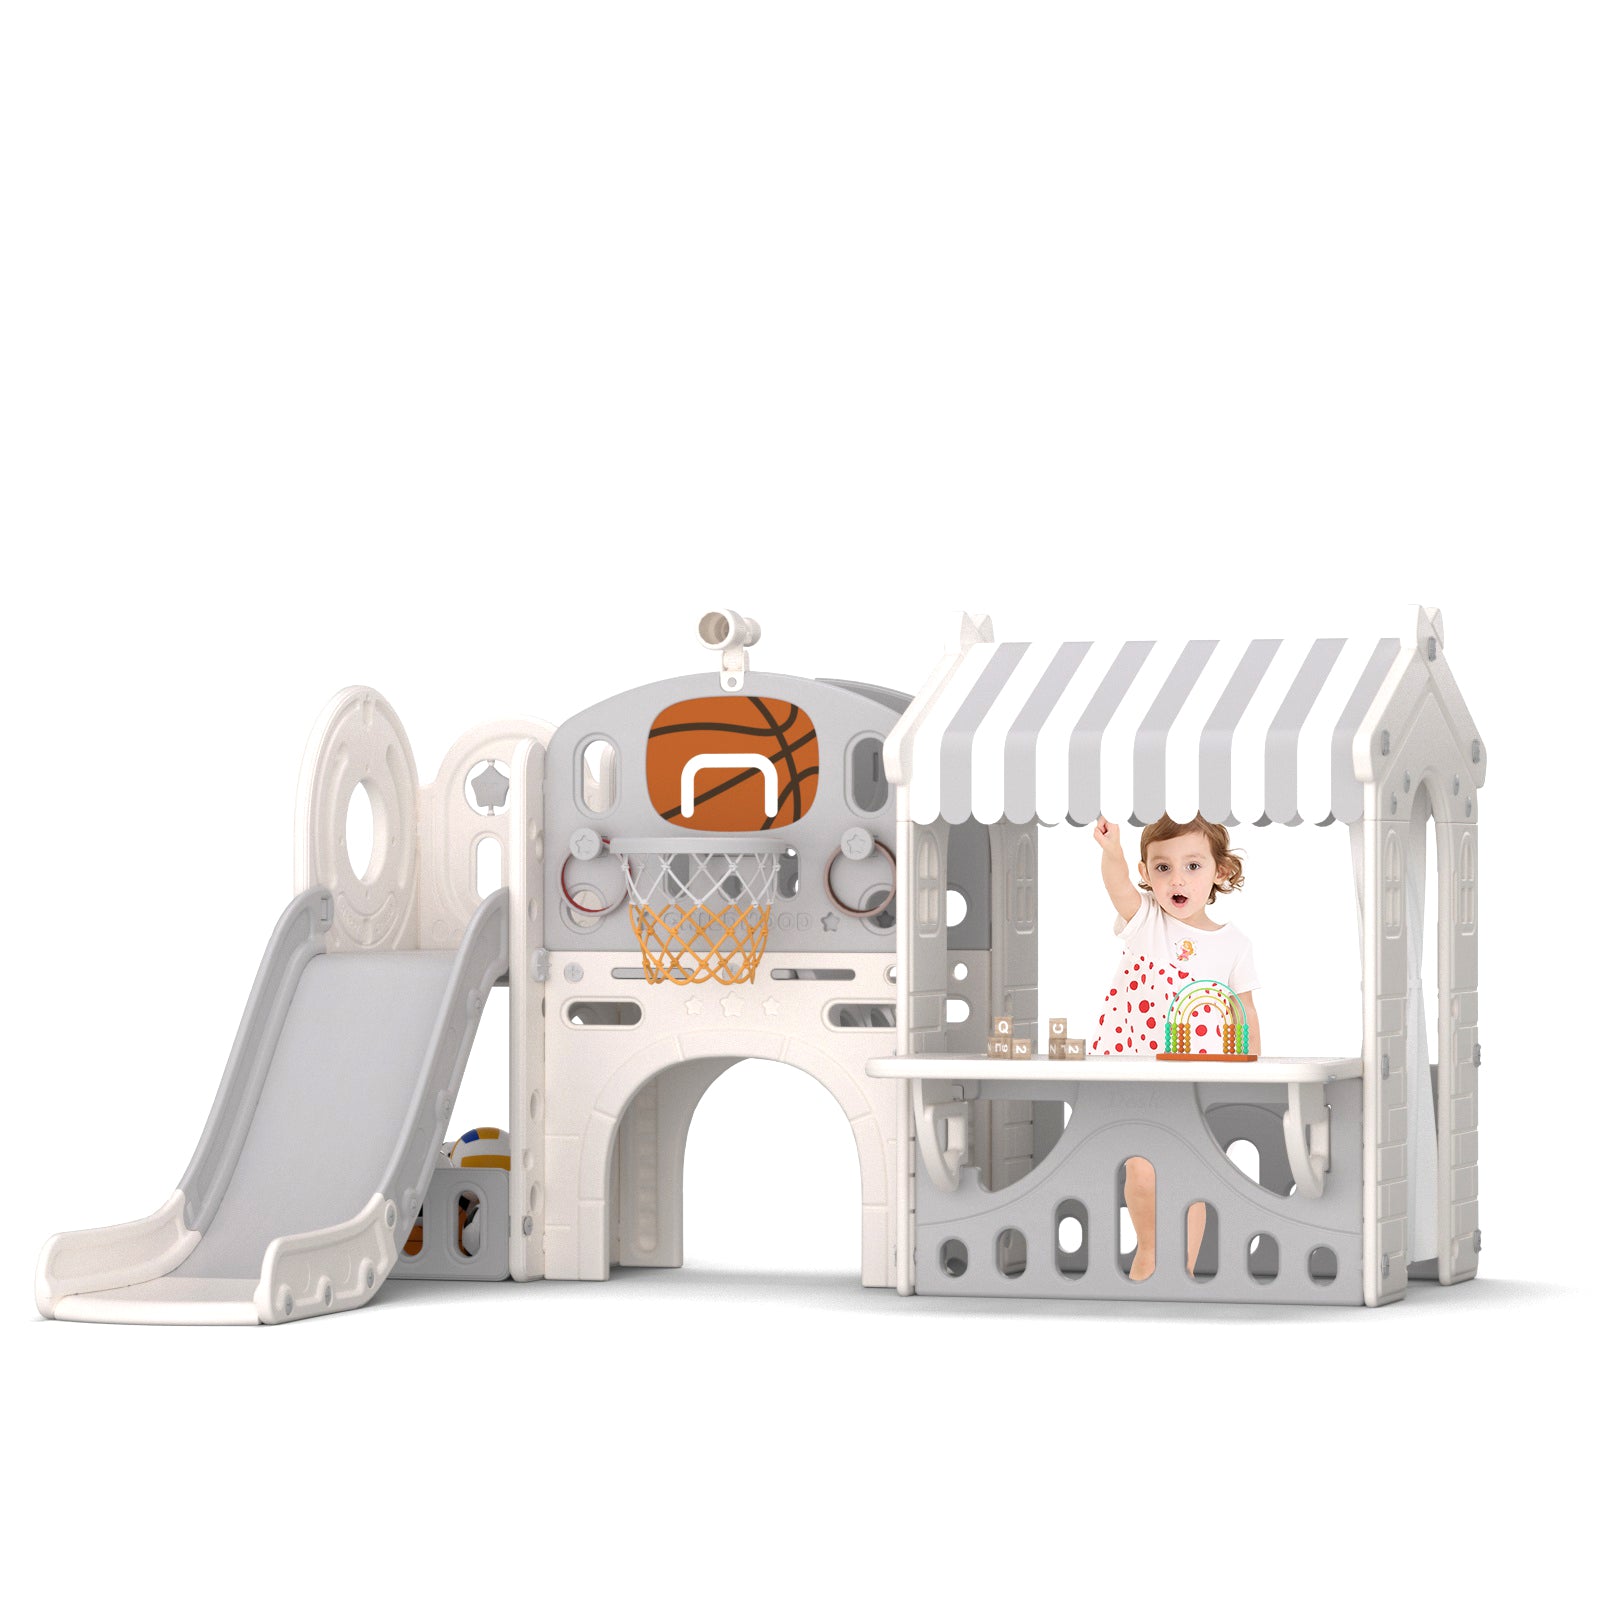 XJD 10 in 1 Toddler Slide with house Indoor and Outdoor Plastic Freestanding Slide, Gray